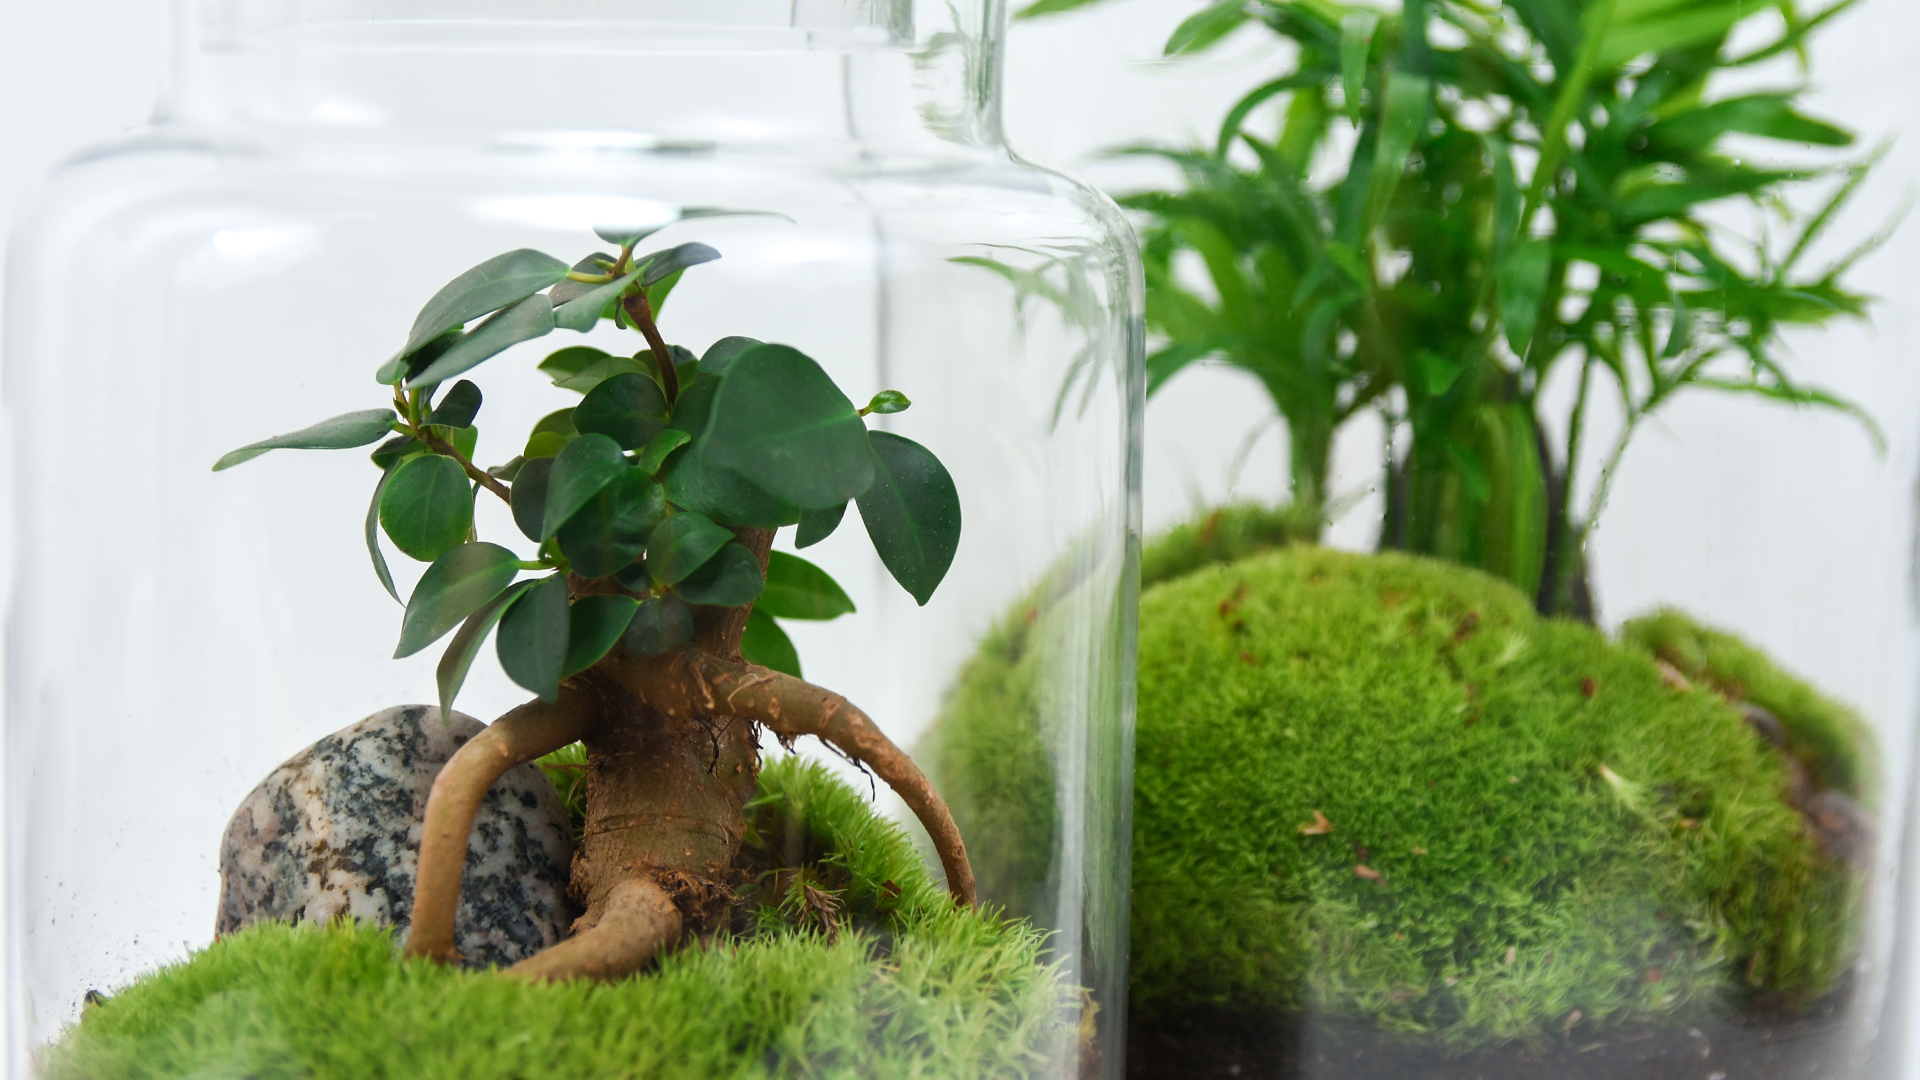 🎁 Offrir un terrarium : mode d'emploi – Microcosmousse